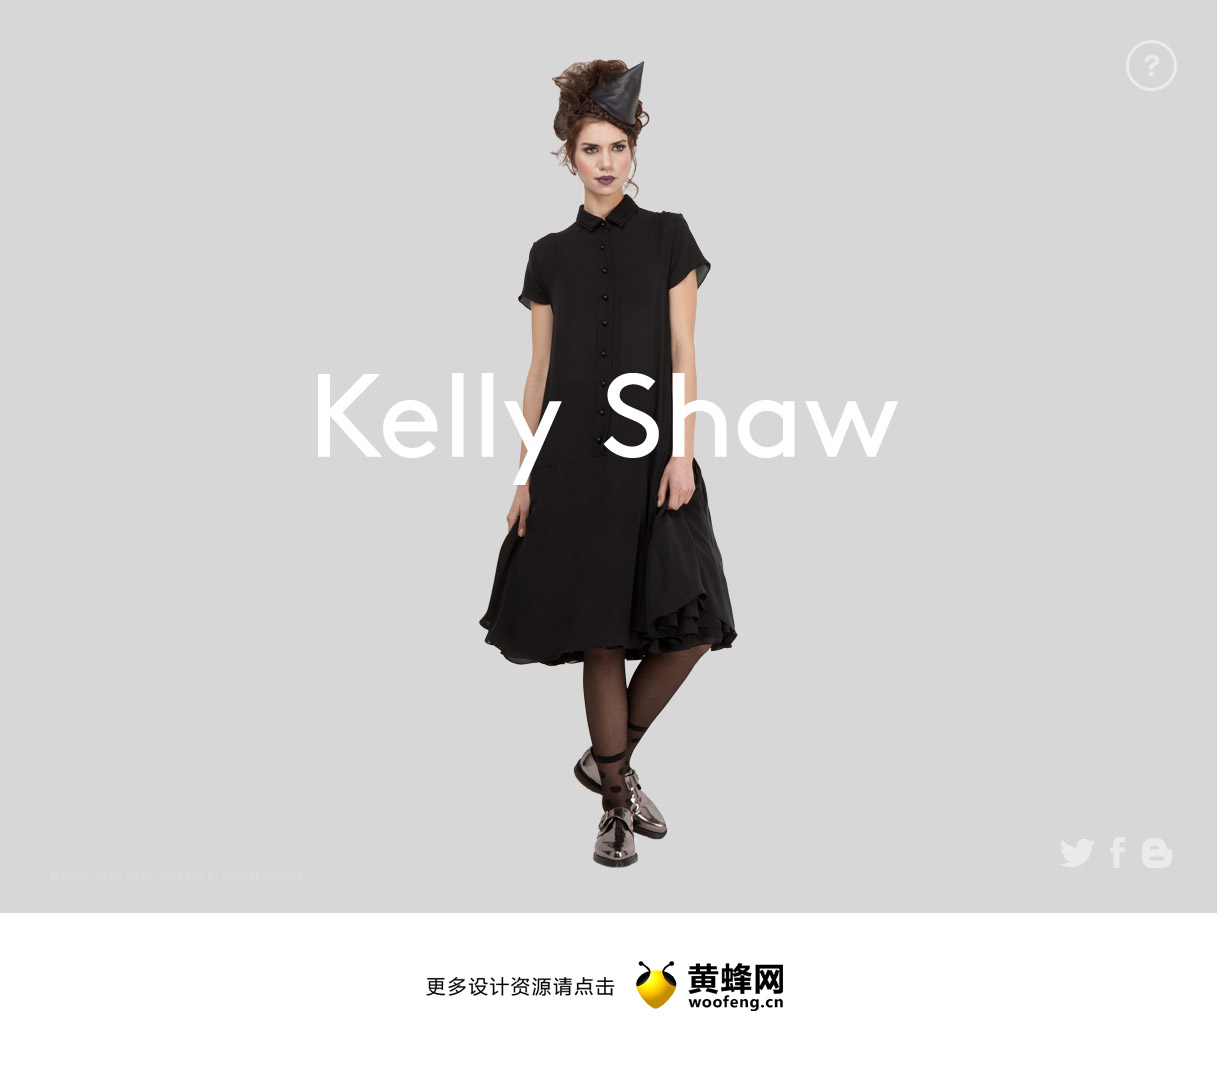 Kelly Shaw时尚服饰网站，来源自黄蜂网https://woofeng.cn/web/